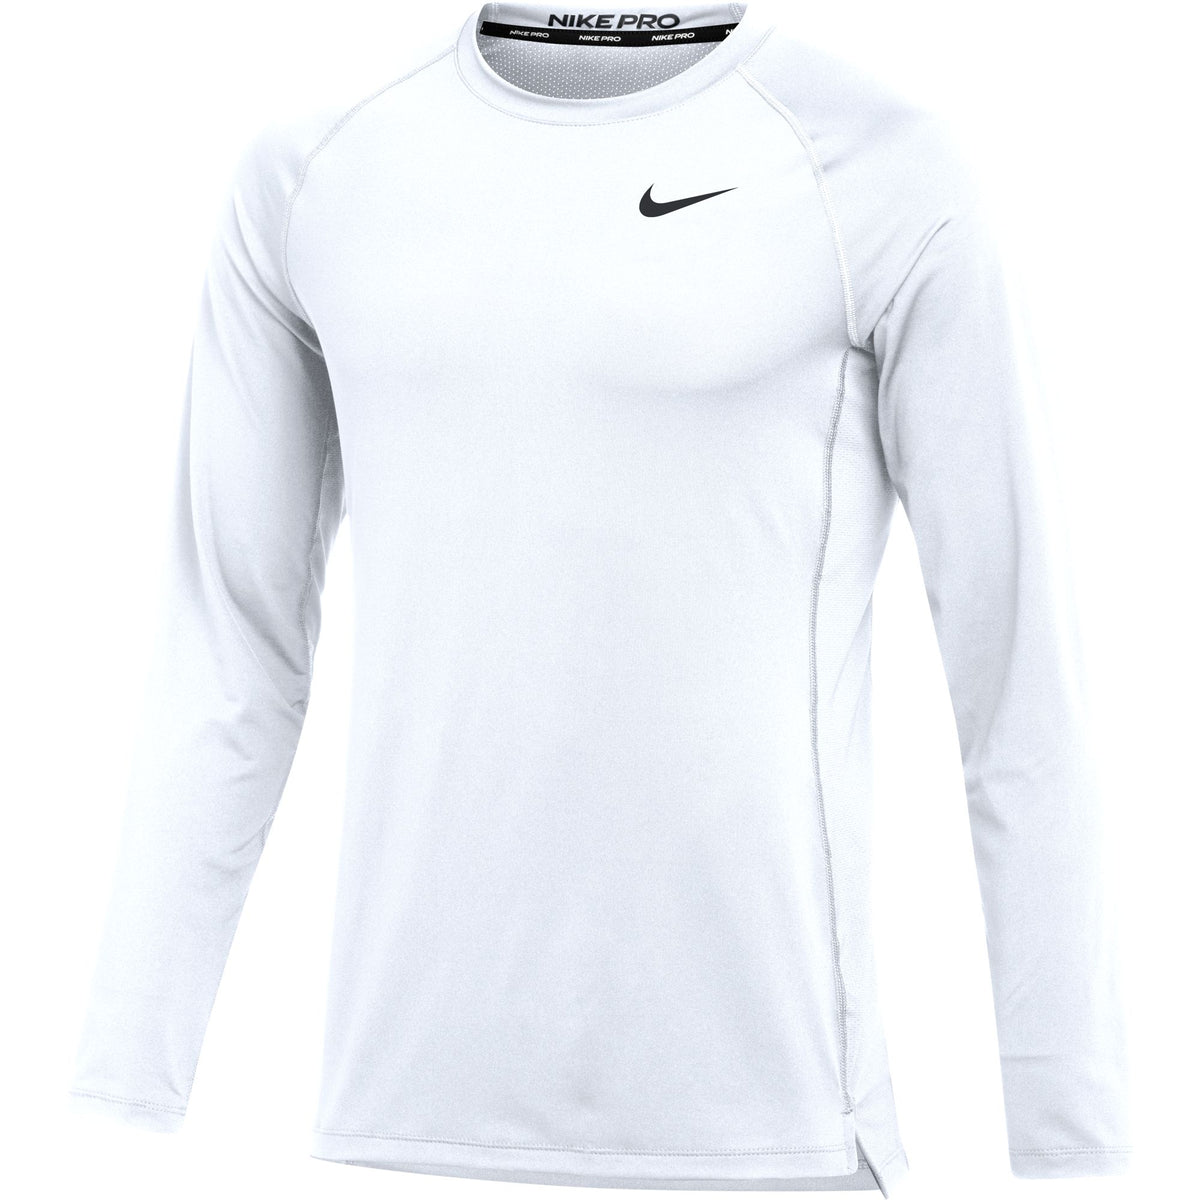 Nike Pro Slim White Ls Training Top - Niky's Sports